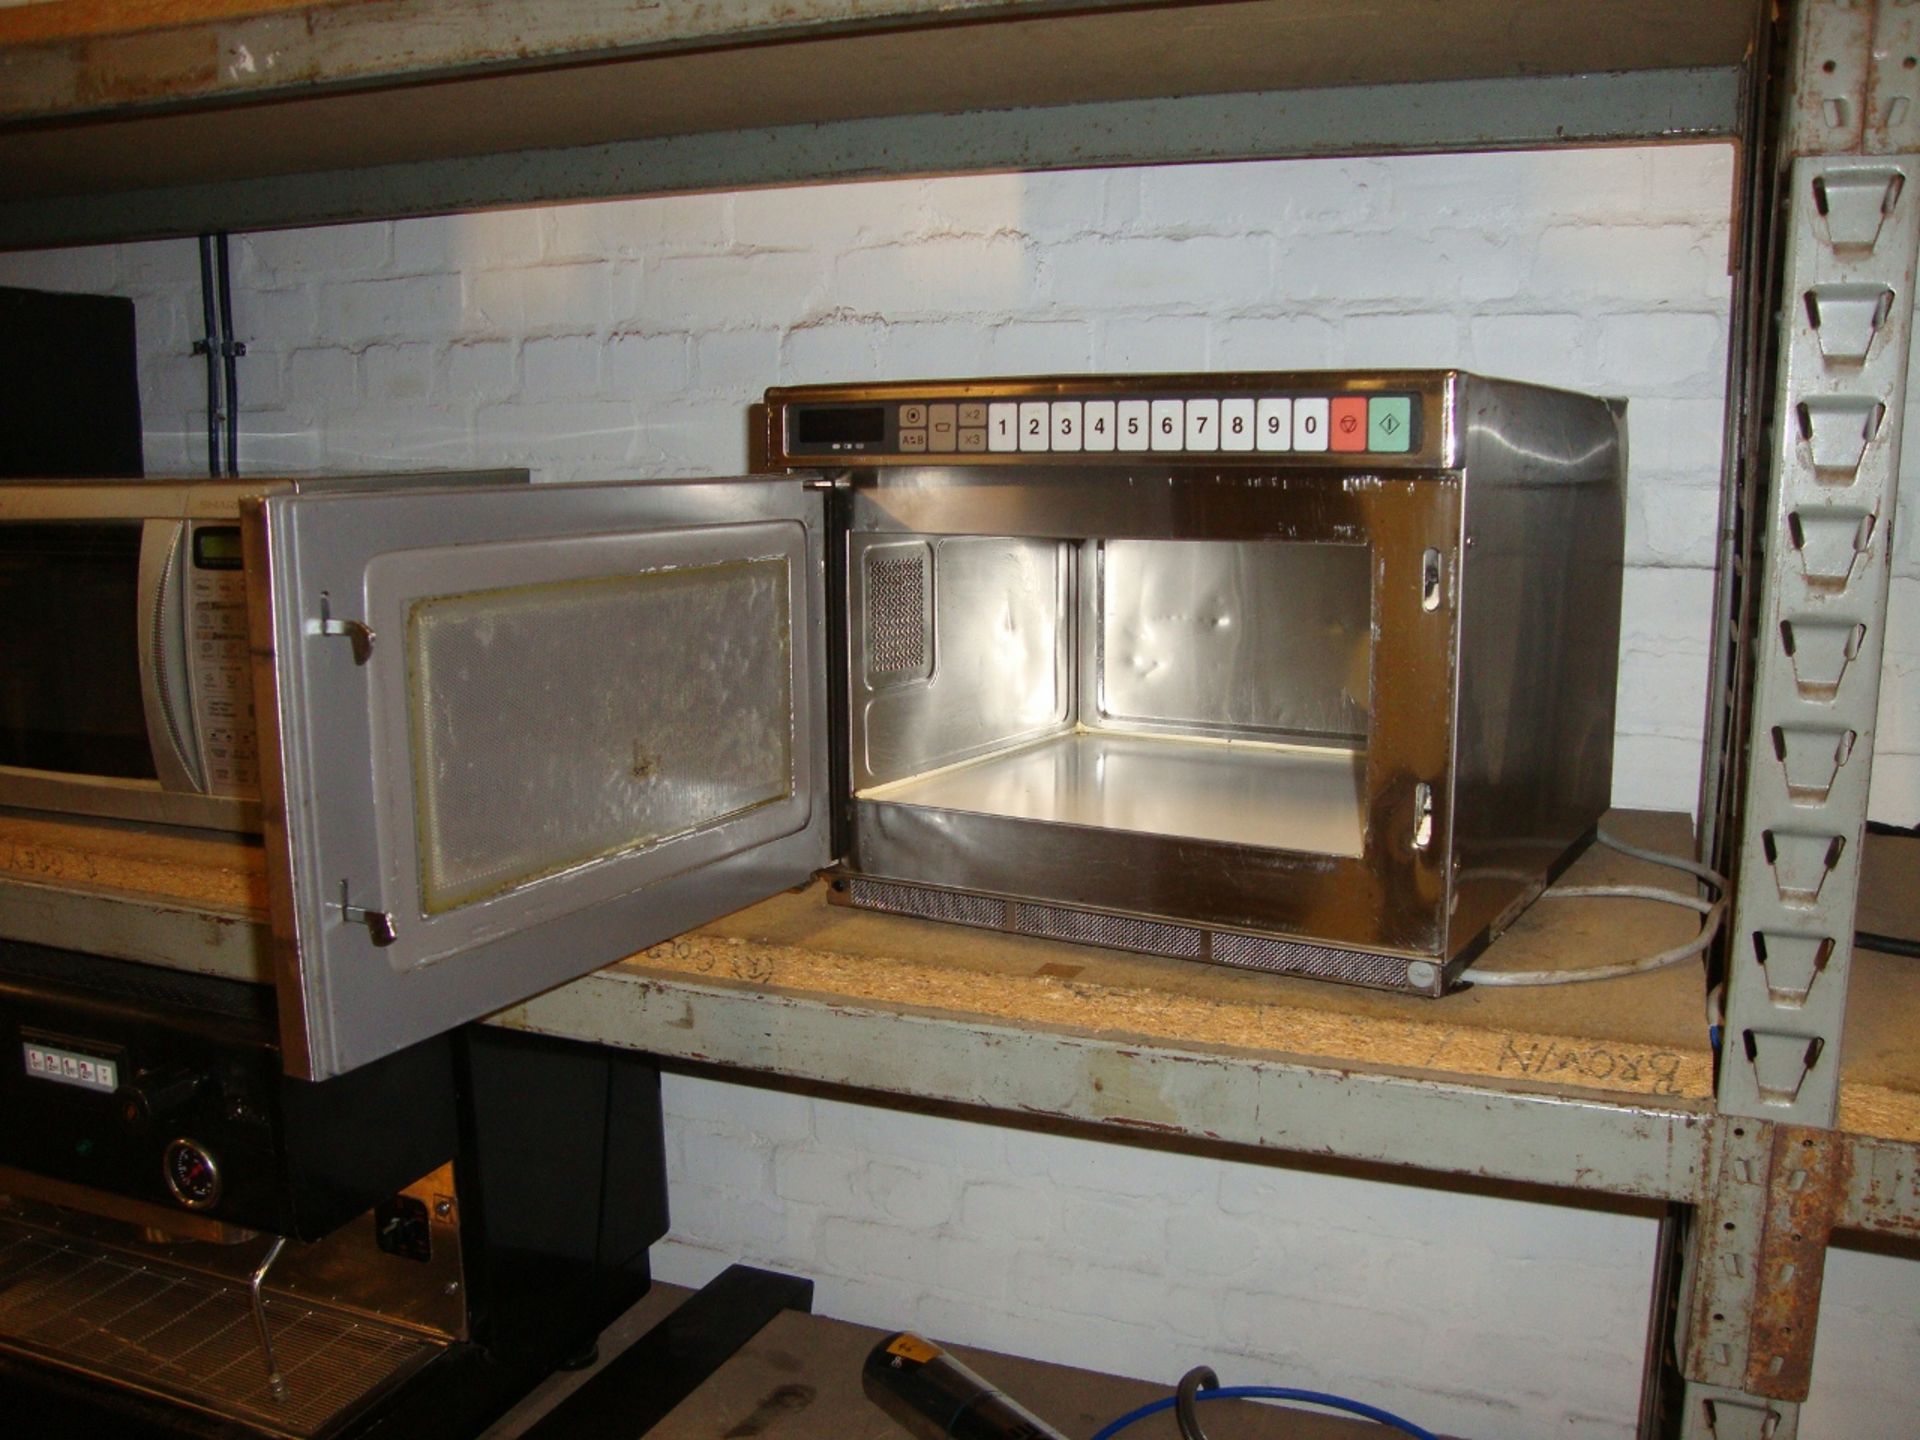 Panasonic stainless steel commercial microwave, model NE-1856 - Image 3 of 3